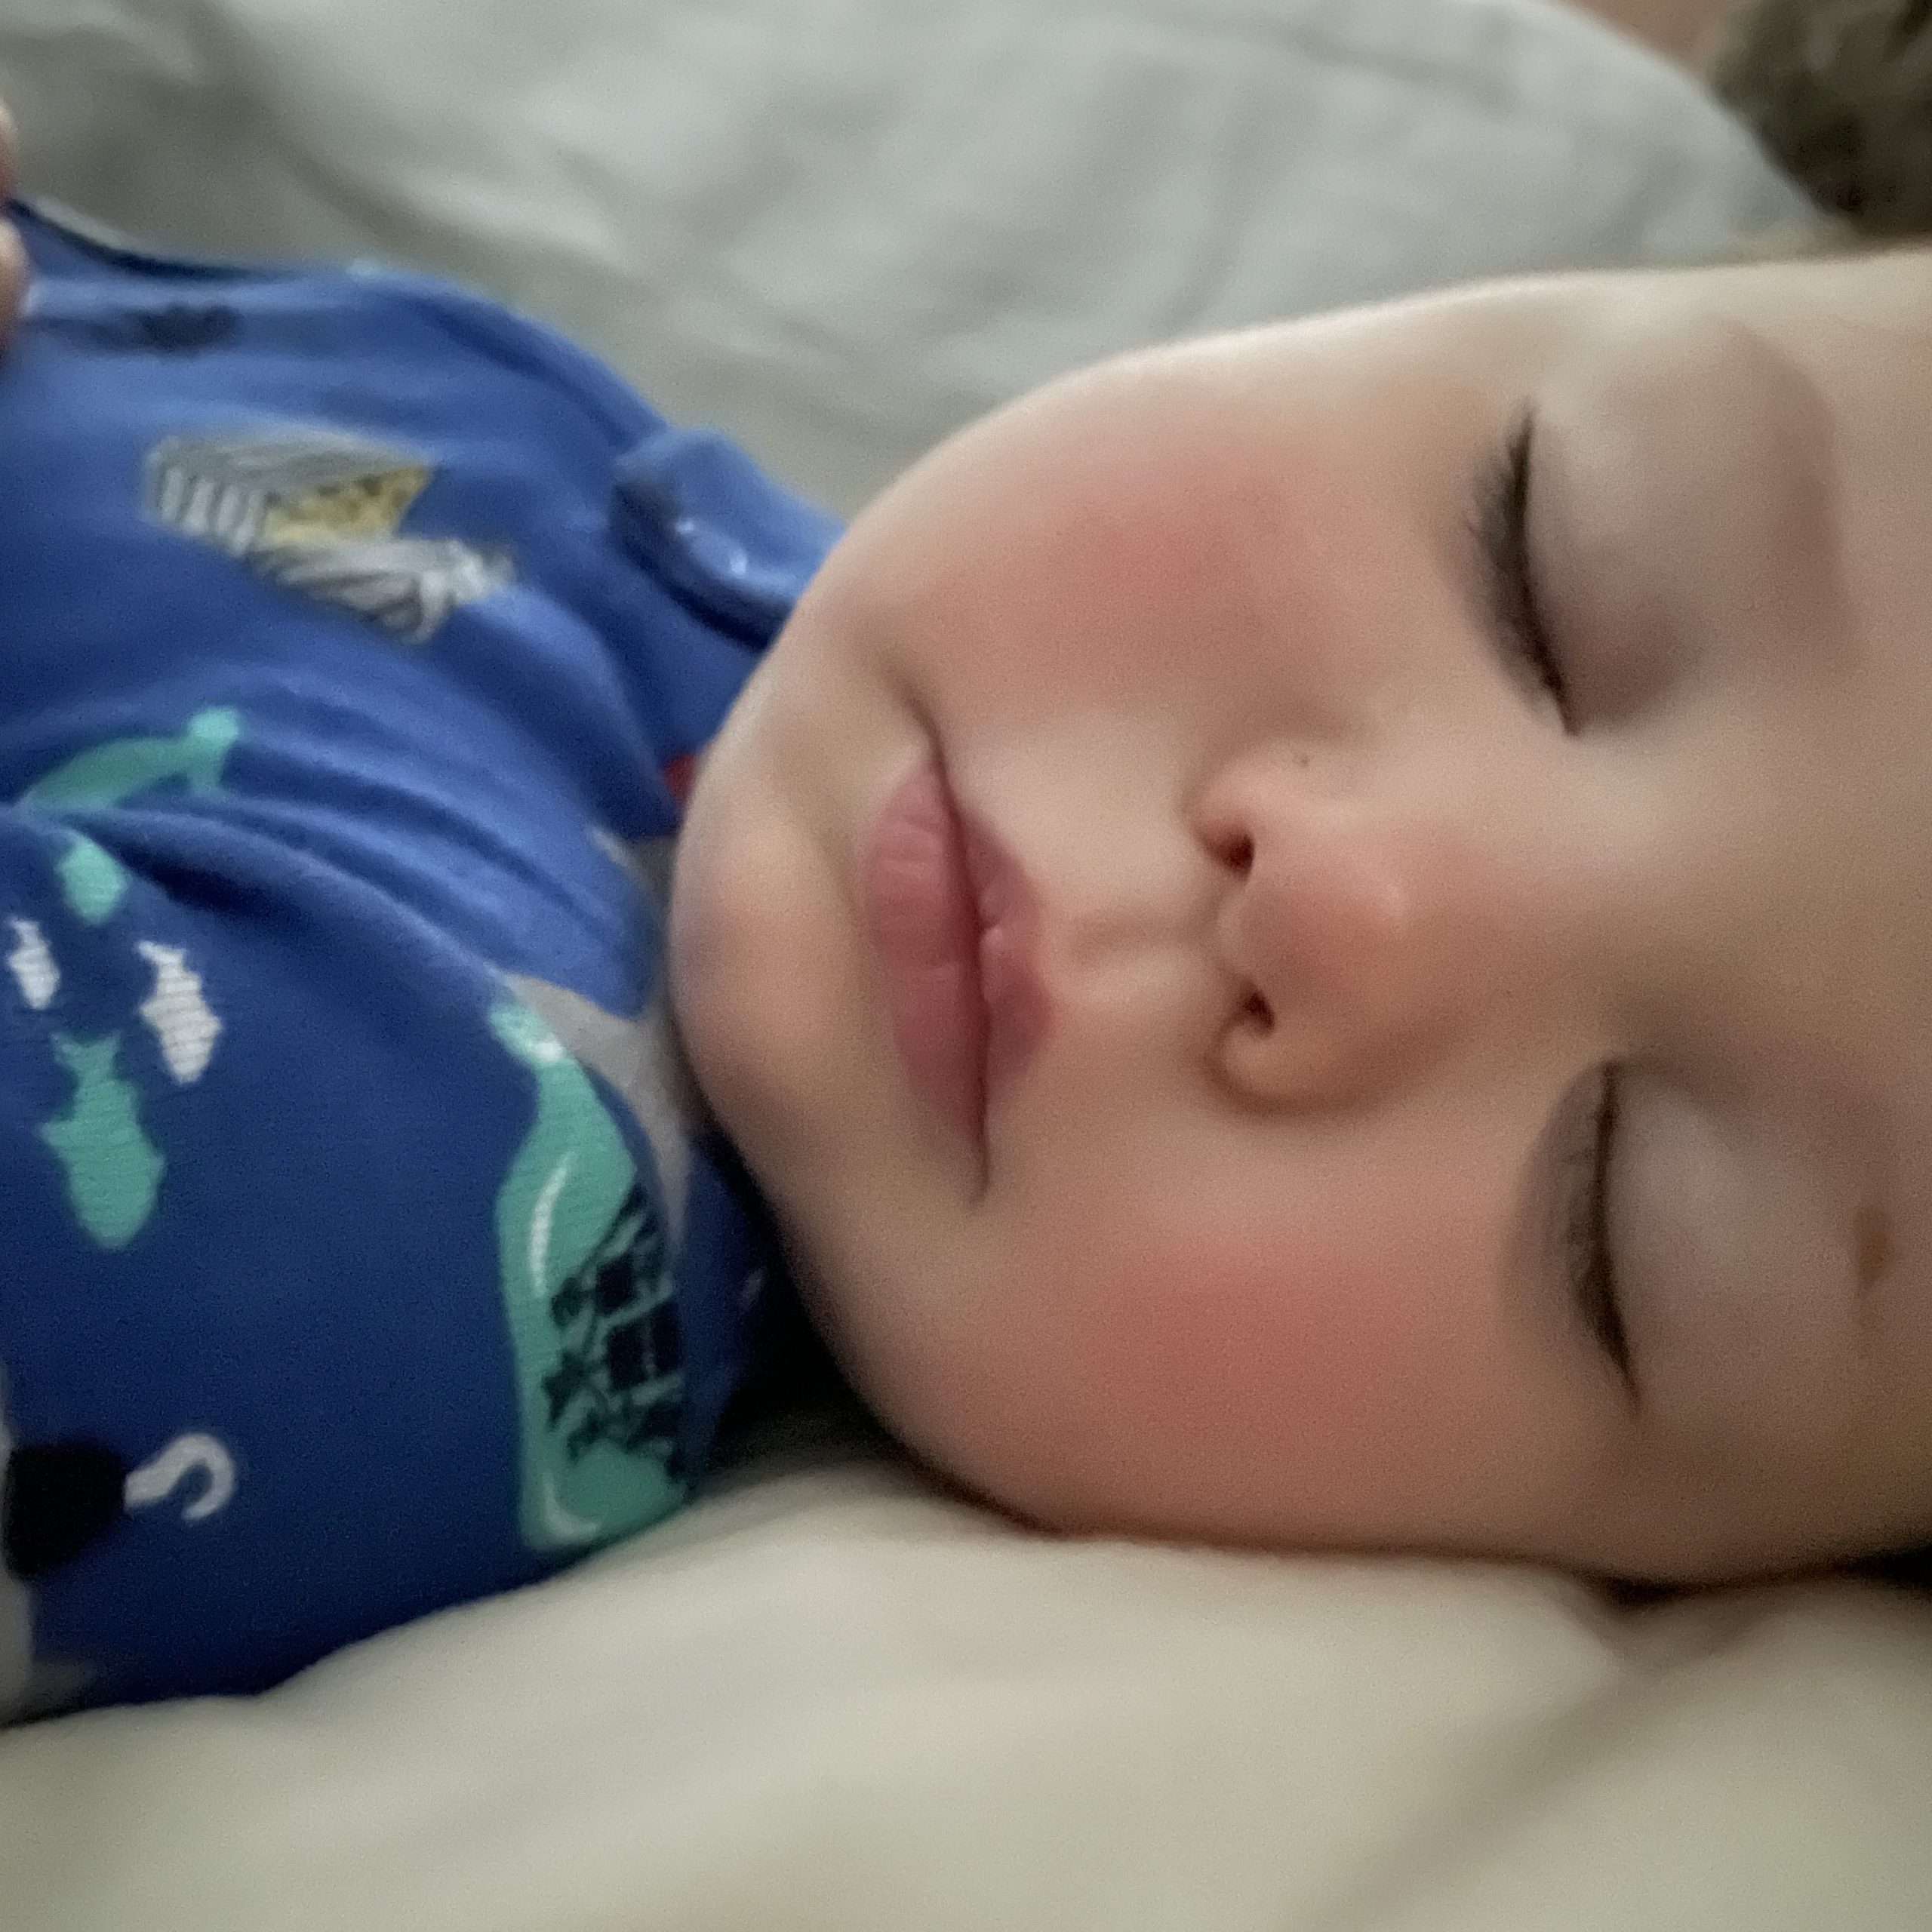 Young boy sleeping peacefully wearing blue pajamas